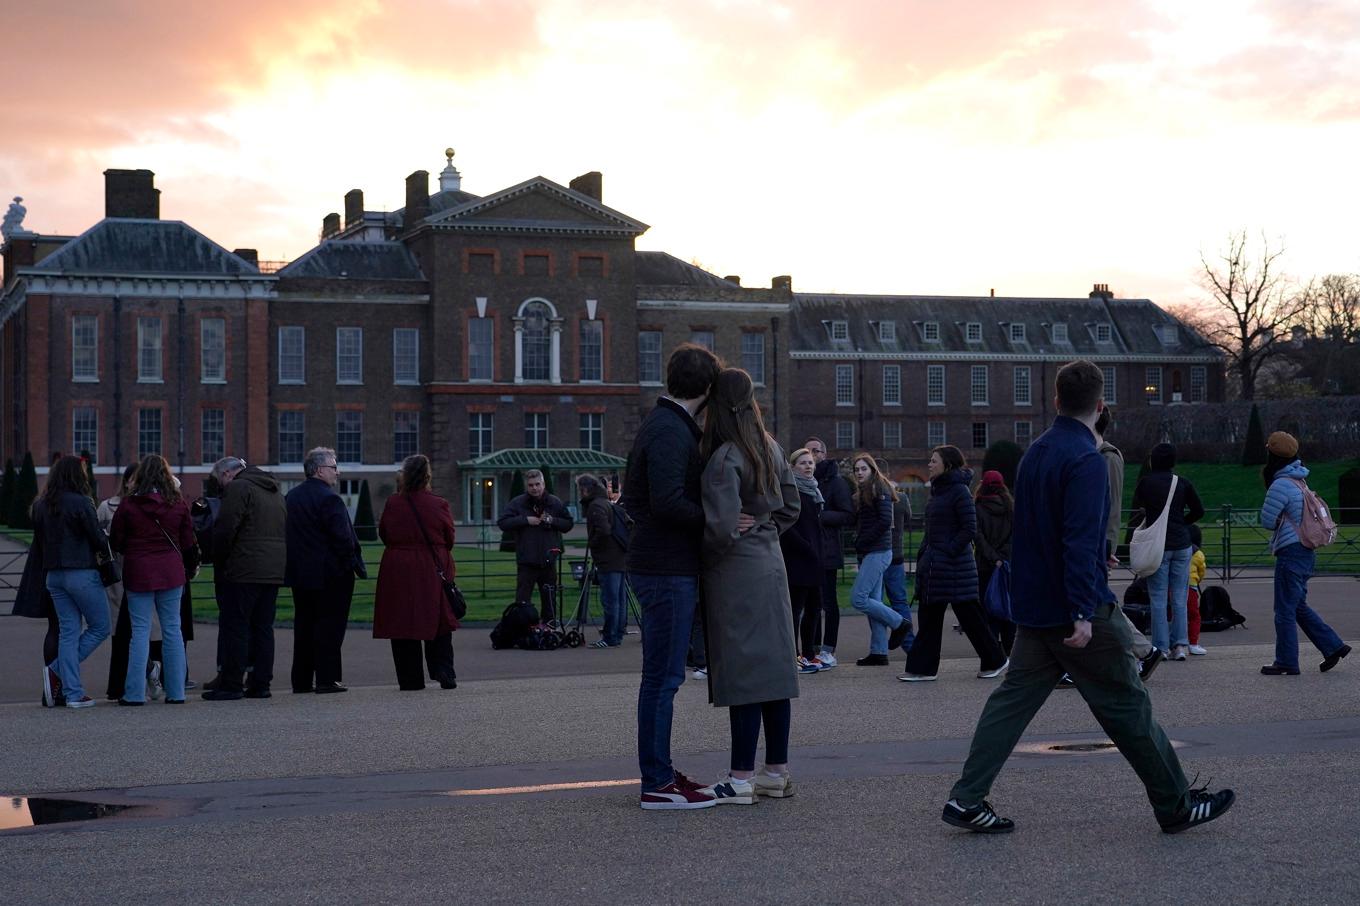 Kensington Palace i London efter prinsessan Kates cancerbesked. Foto: Alberto Pezzali/AP/TT